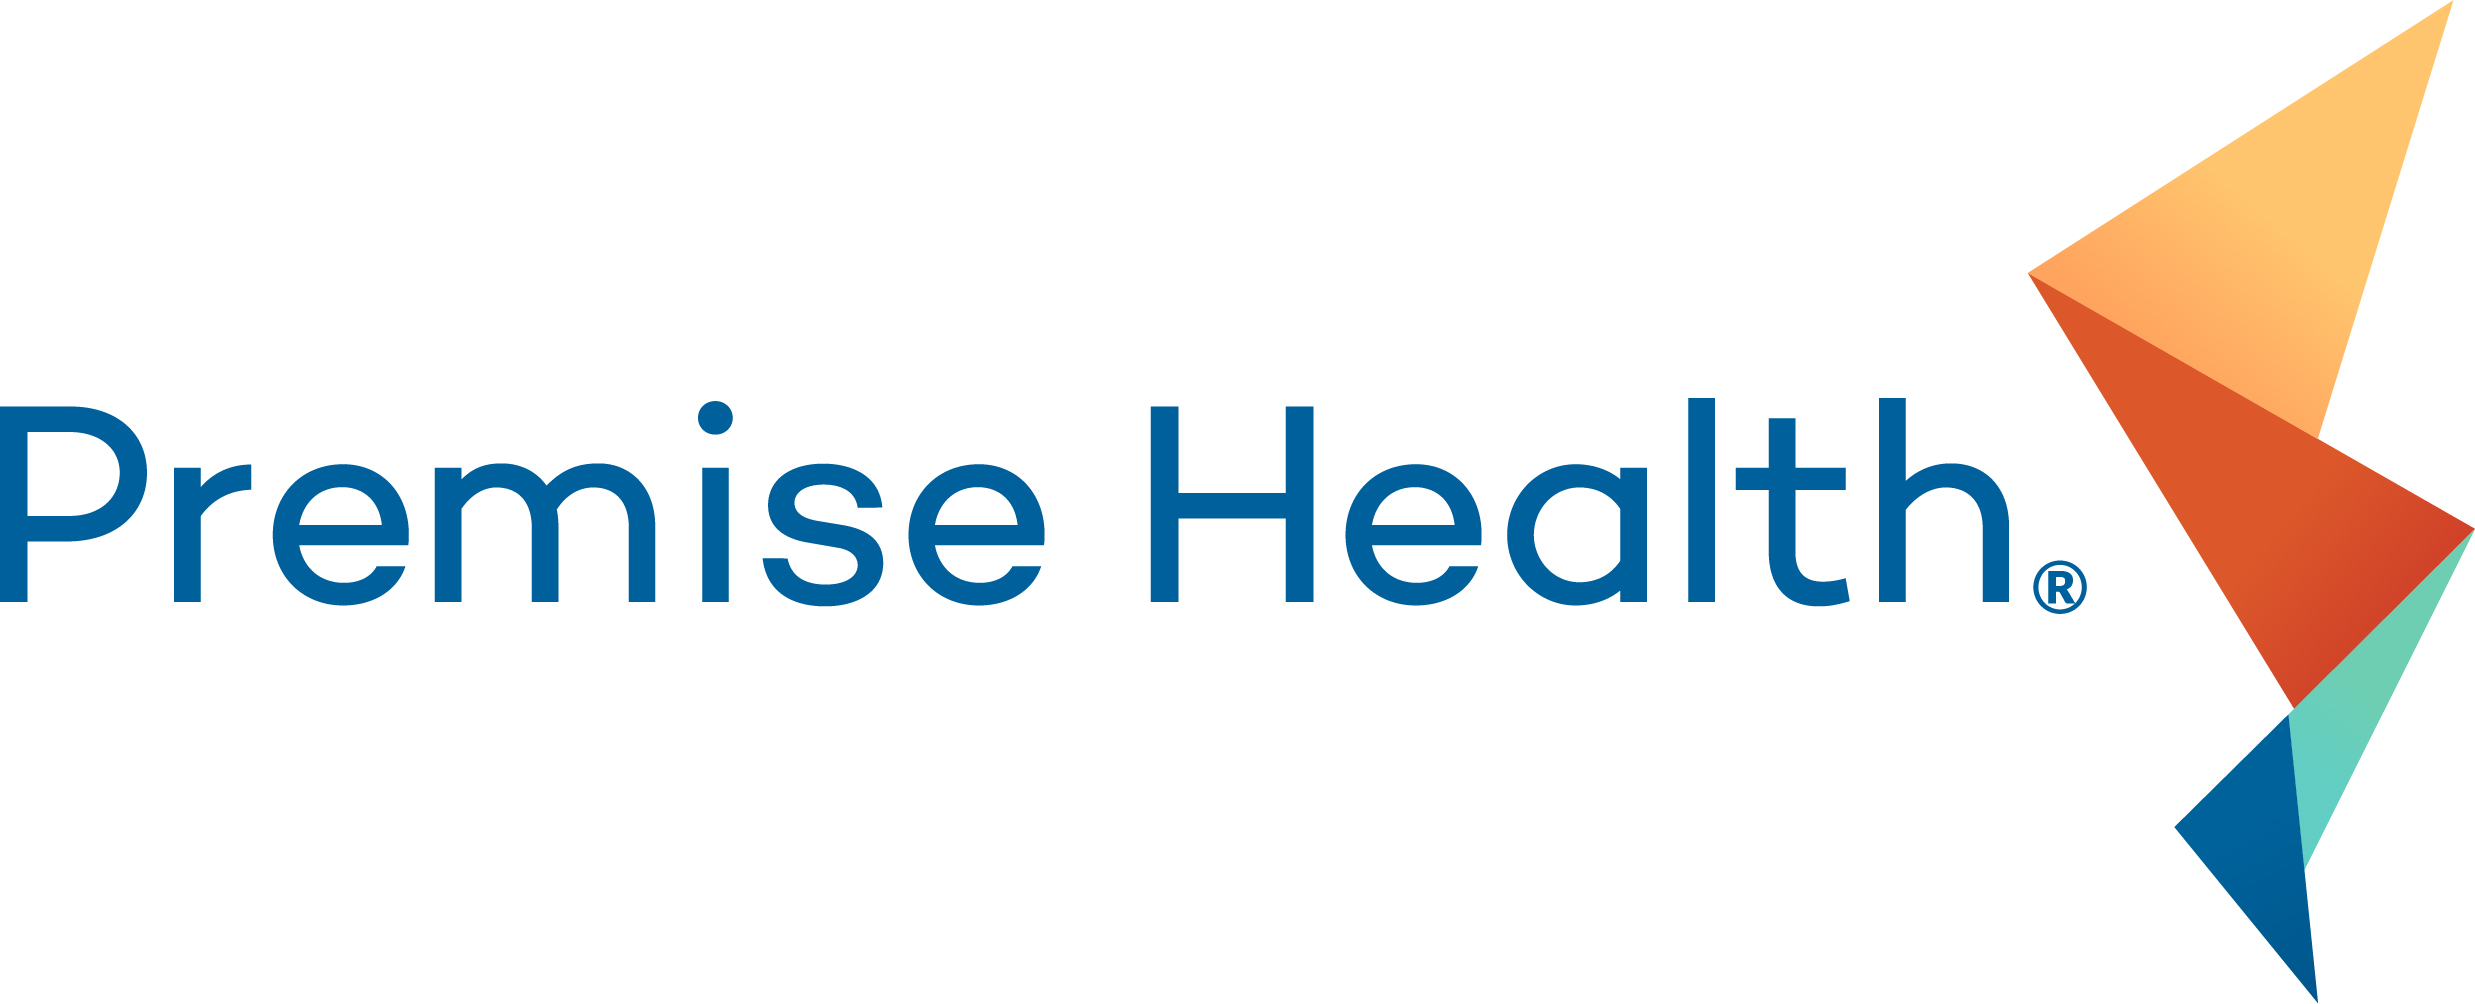 Premise health logo